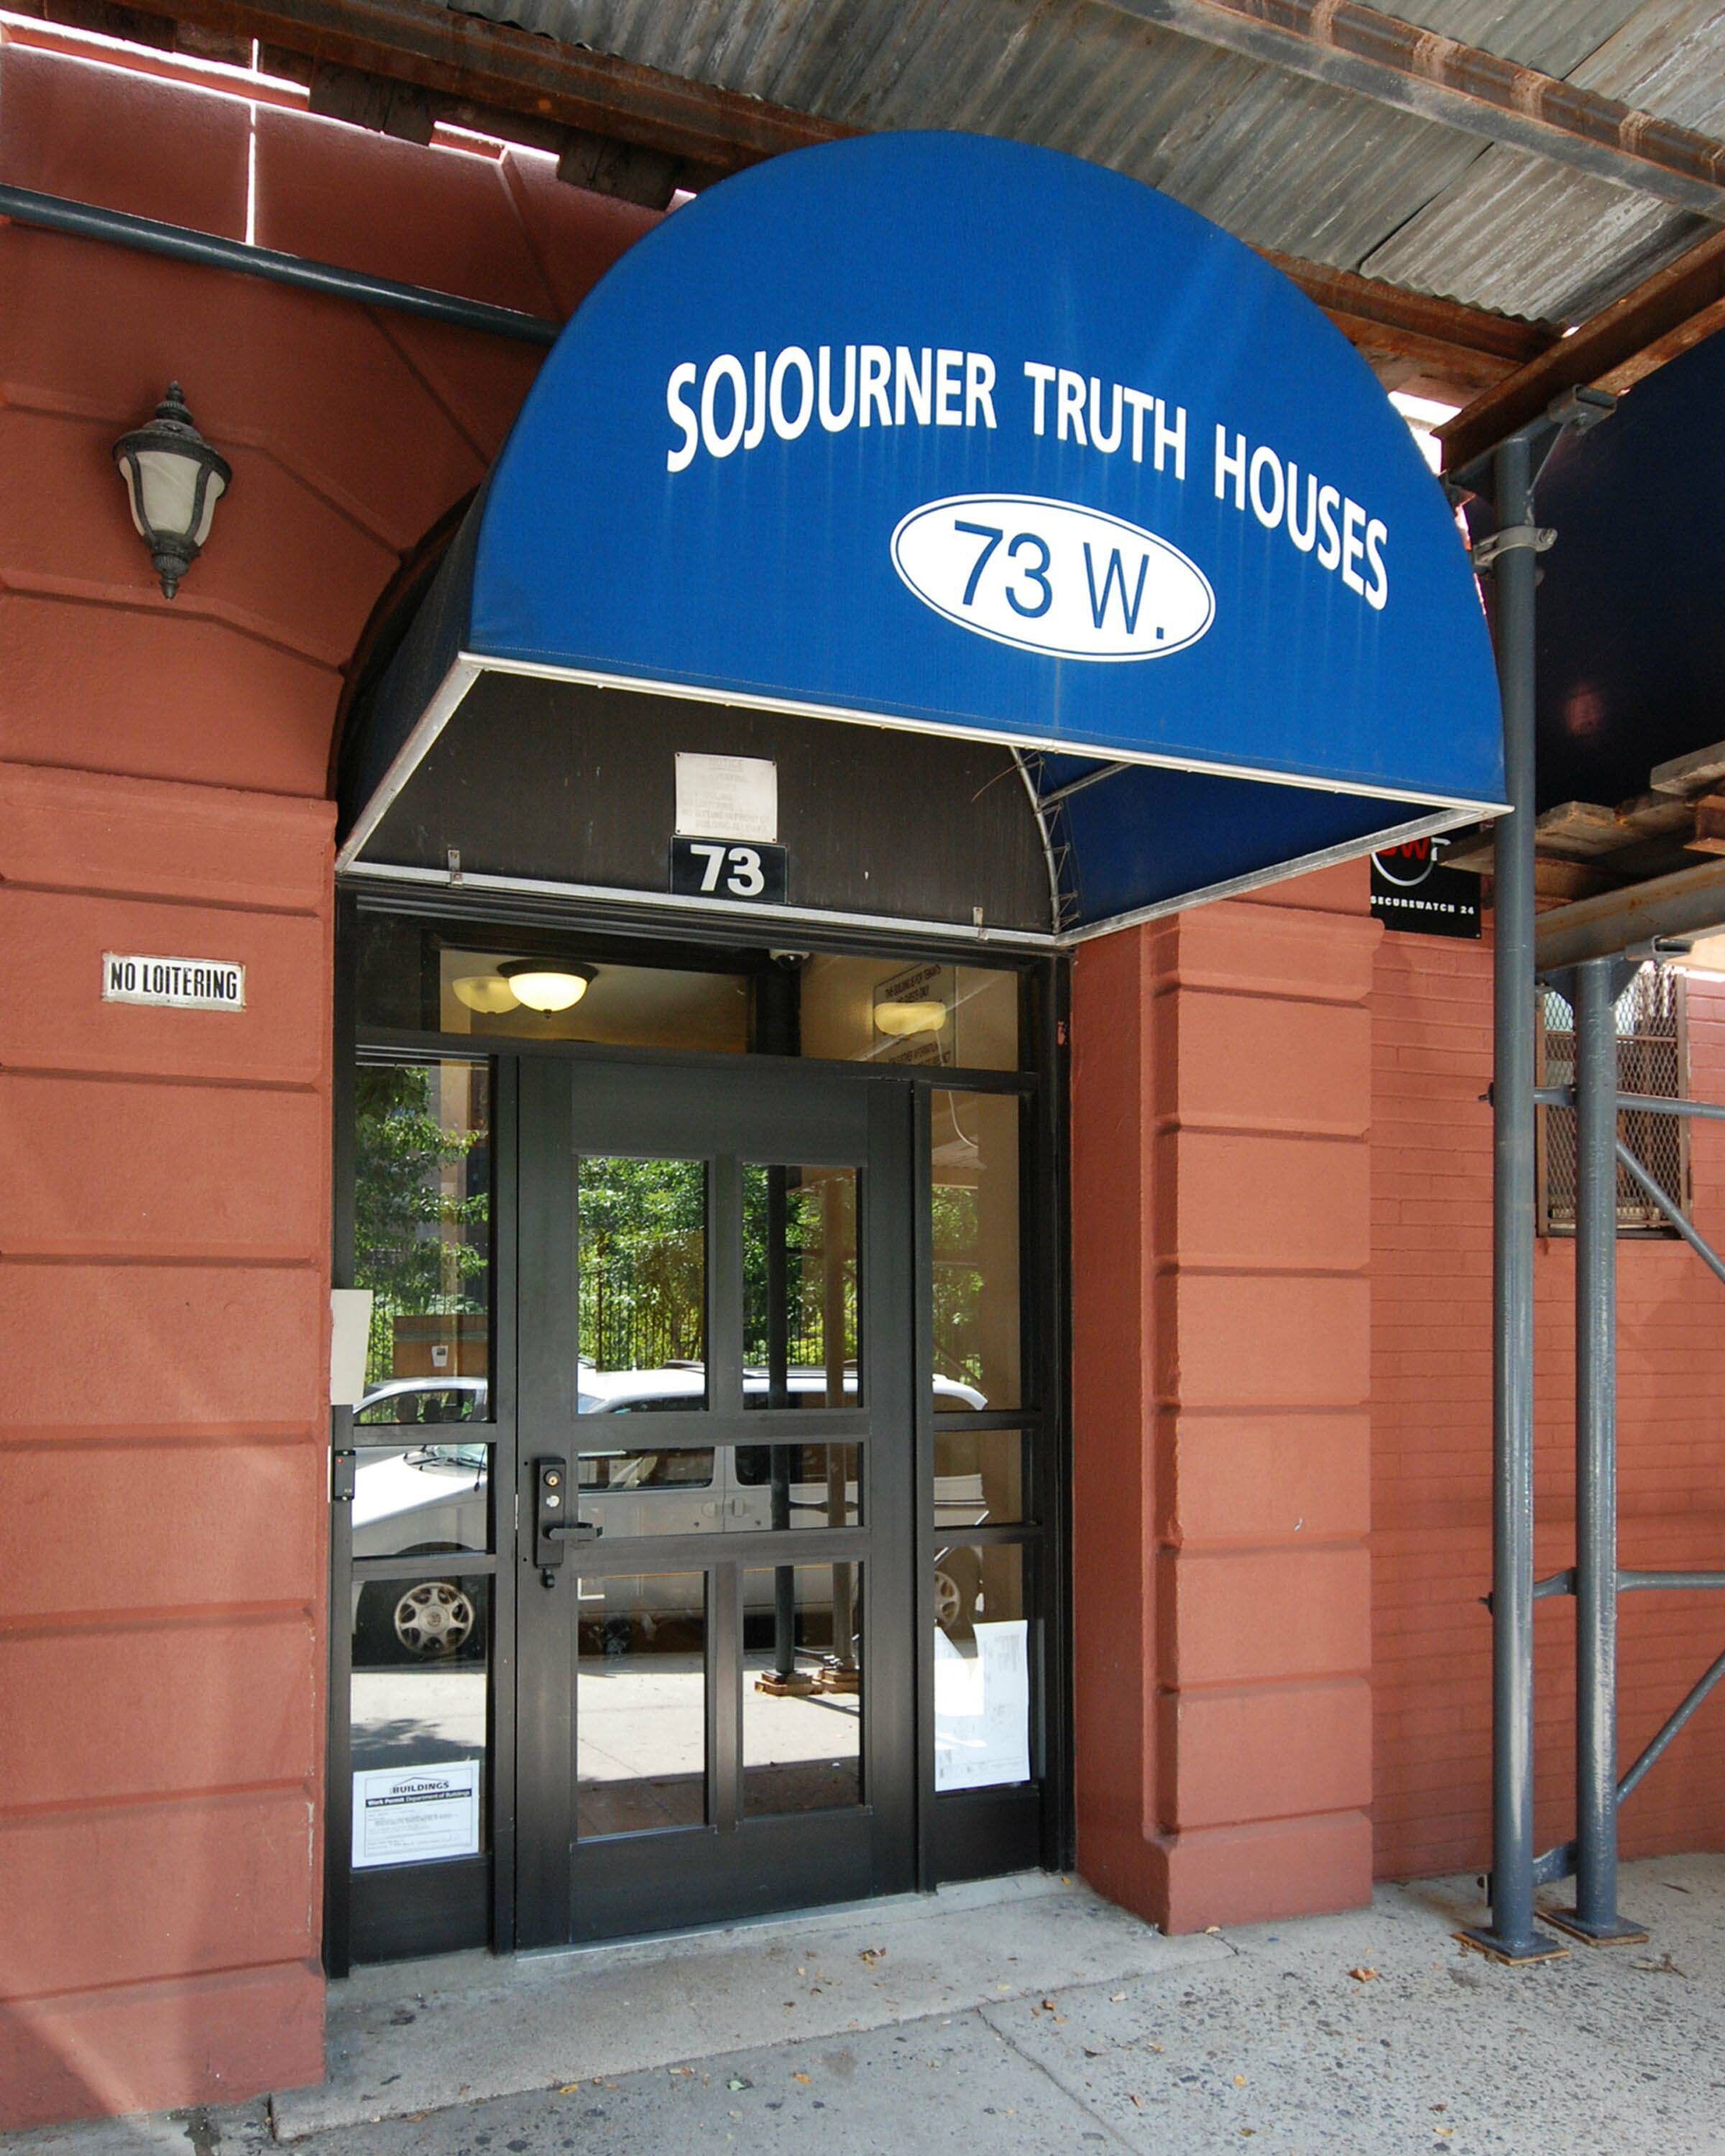 SOJOURNER TRUTH HOUSES